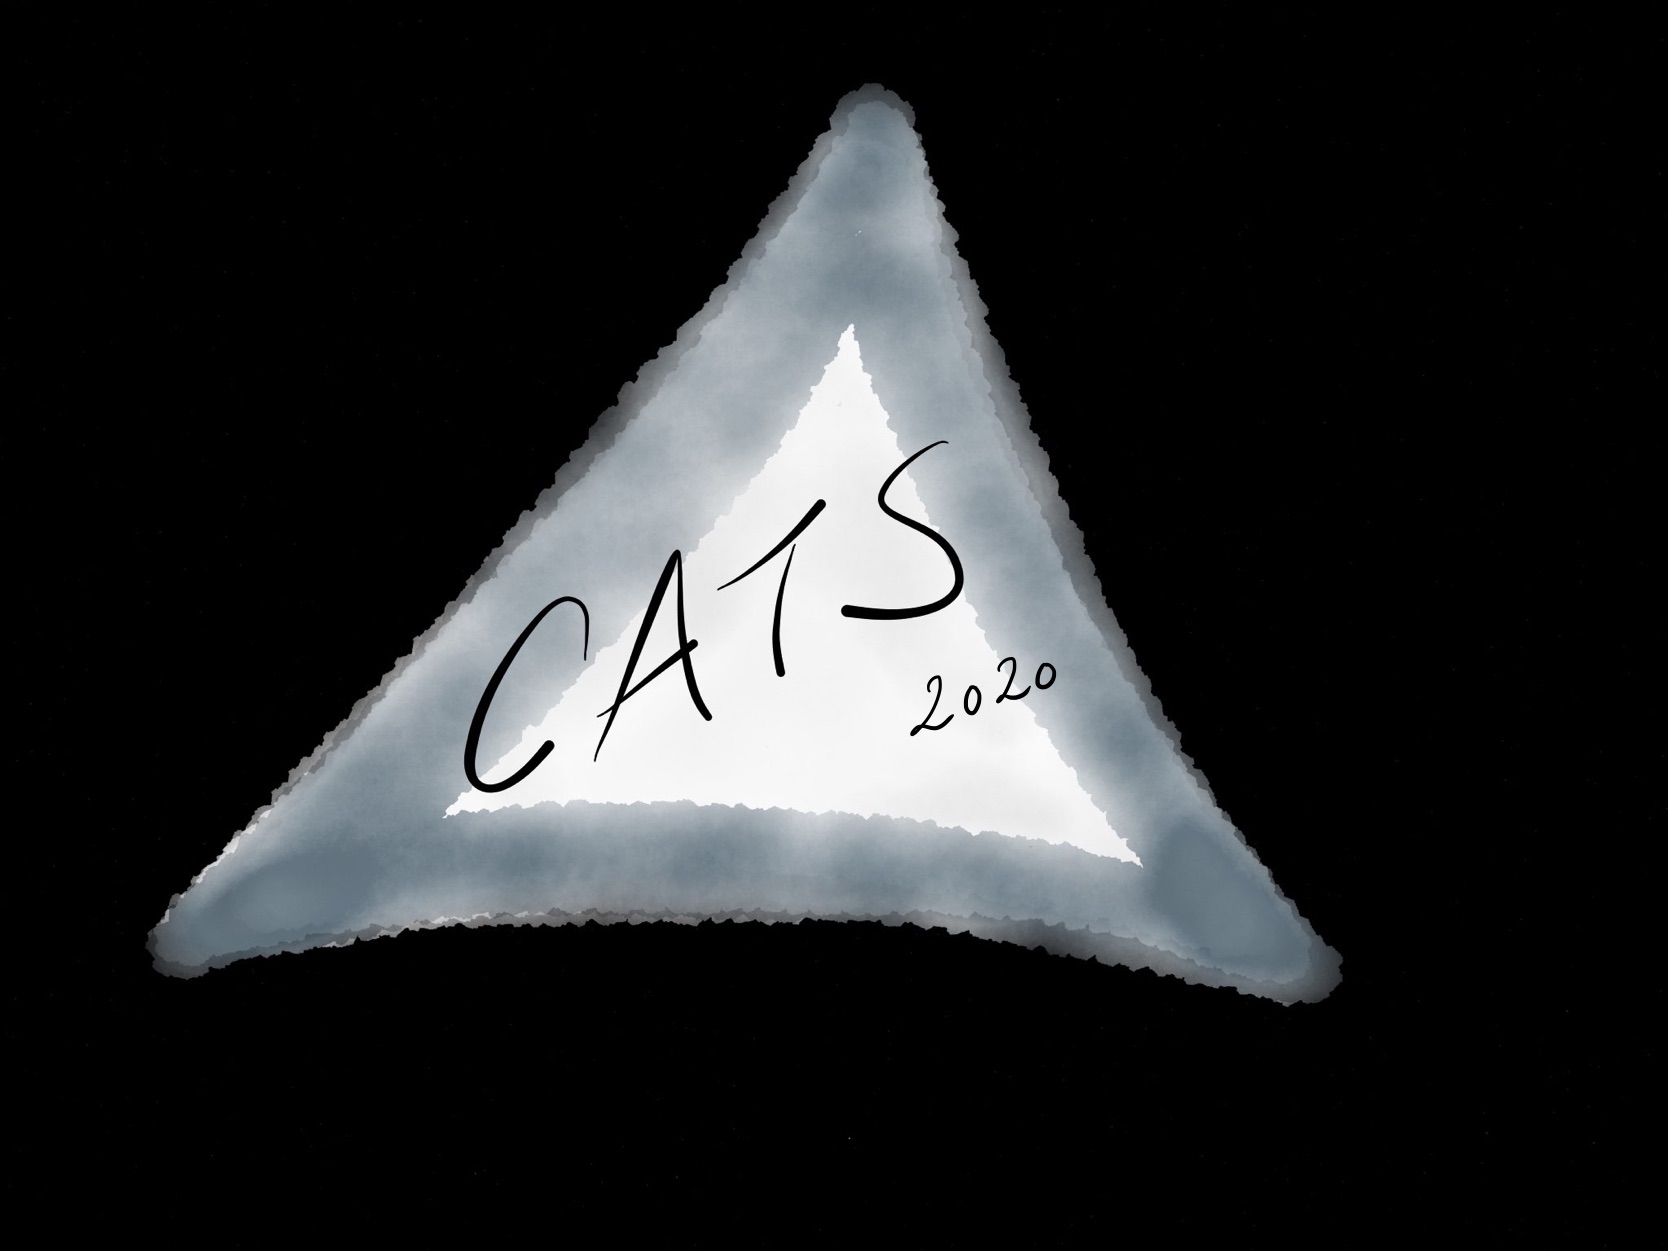 CATS2020